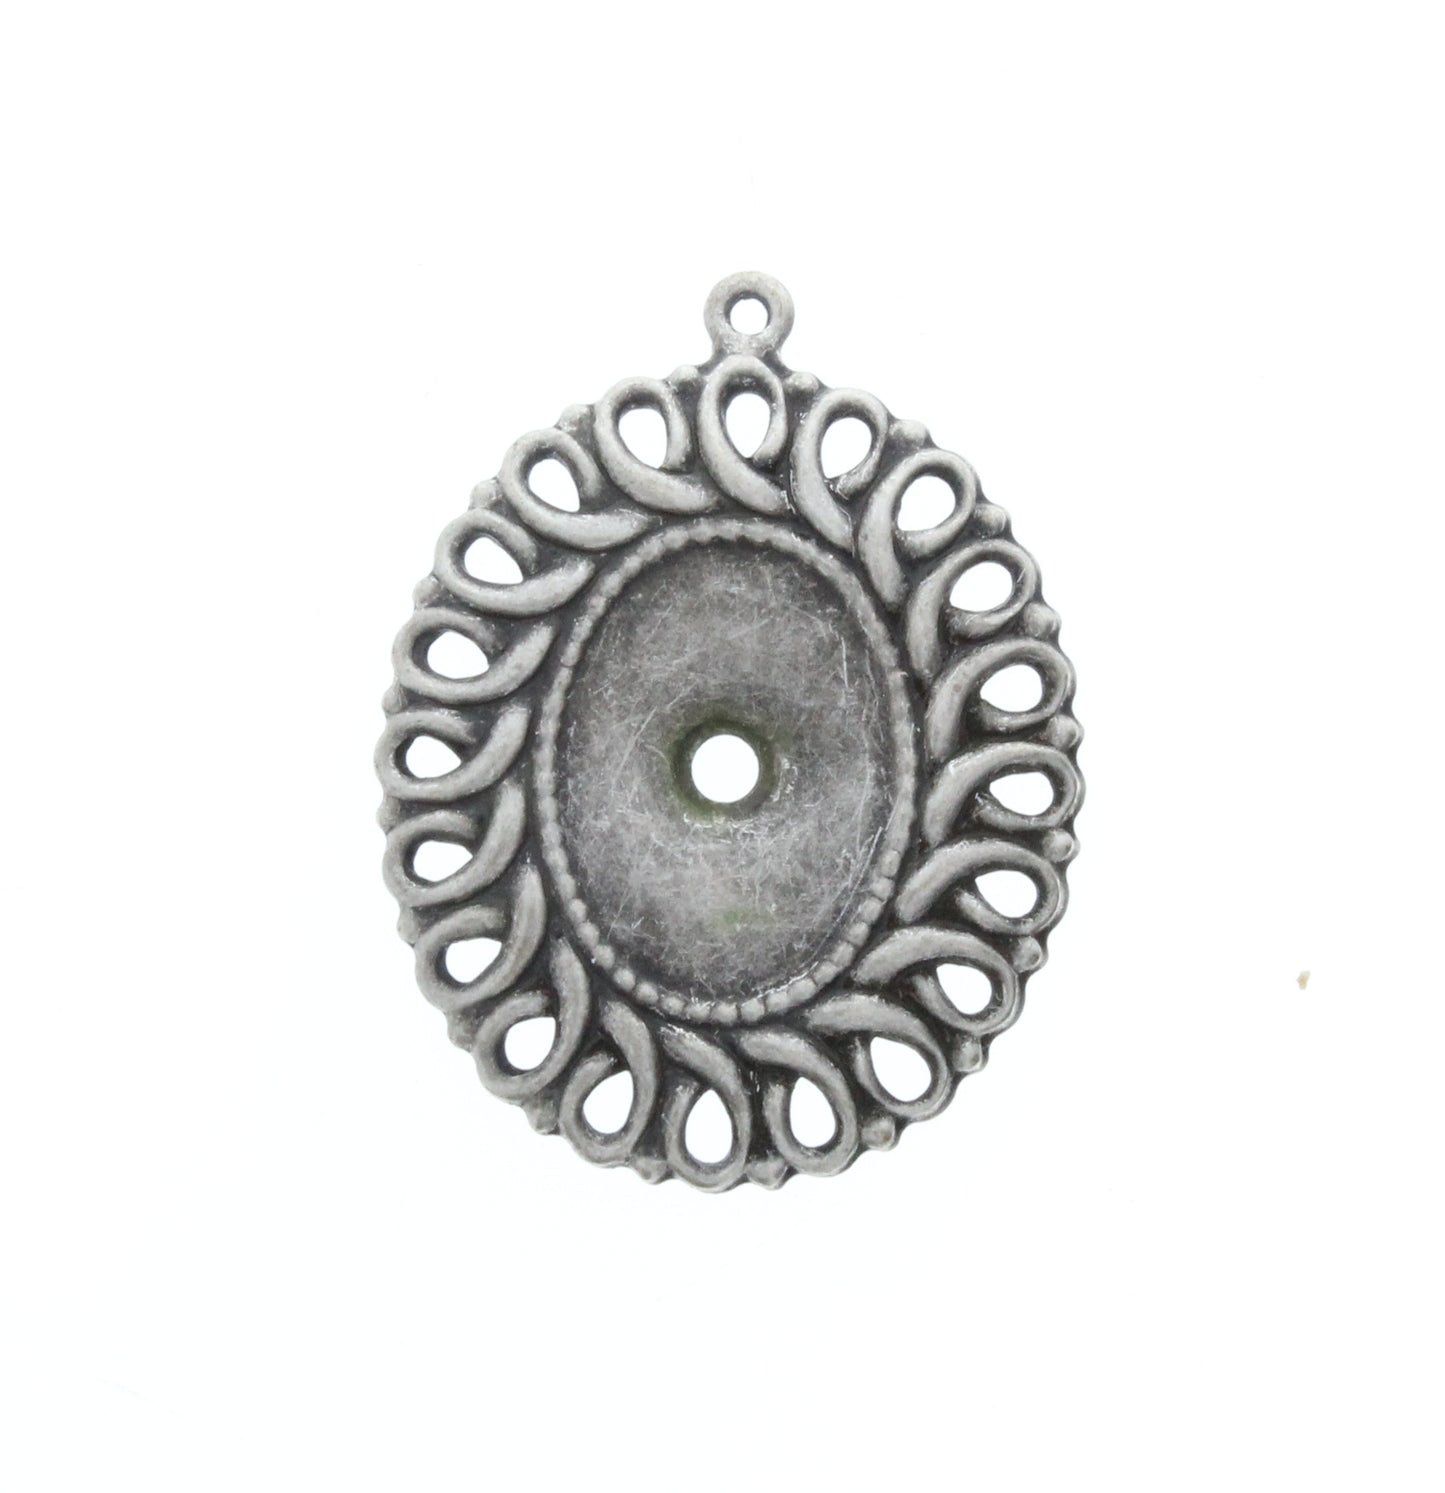 Antique Silver Oval Filigree Charm Pendants w/Bezel Setting, Pk/6